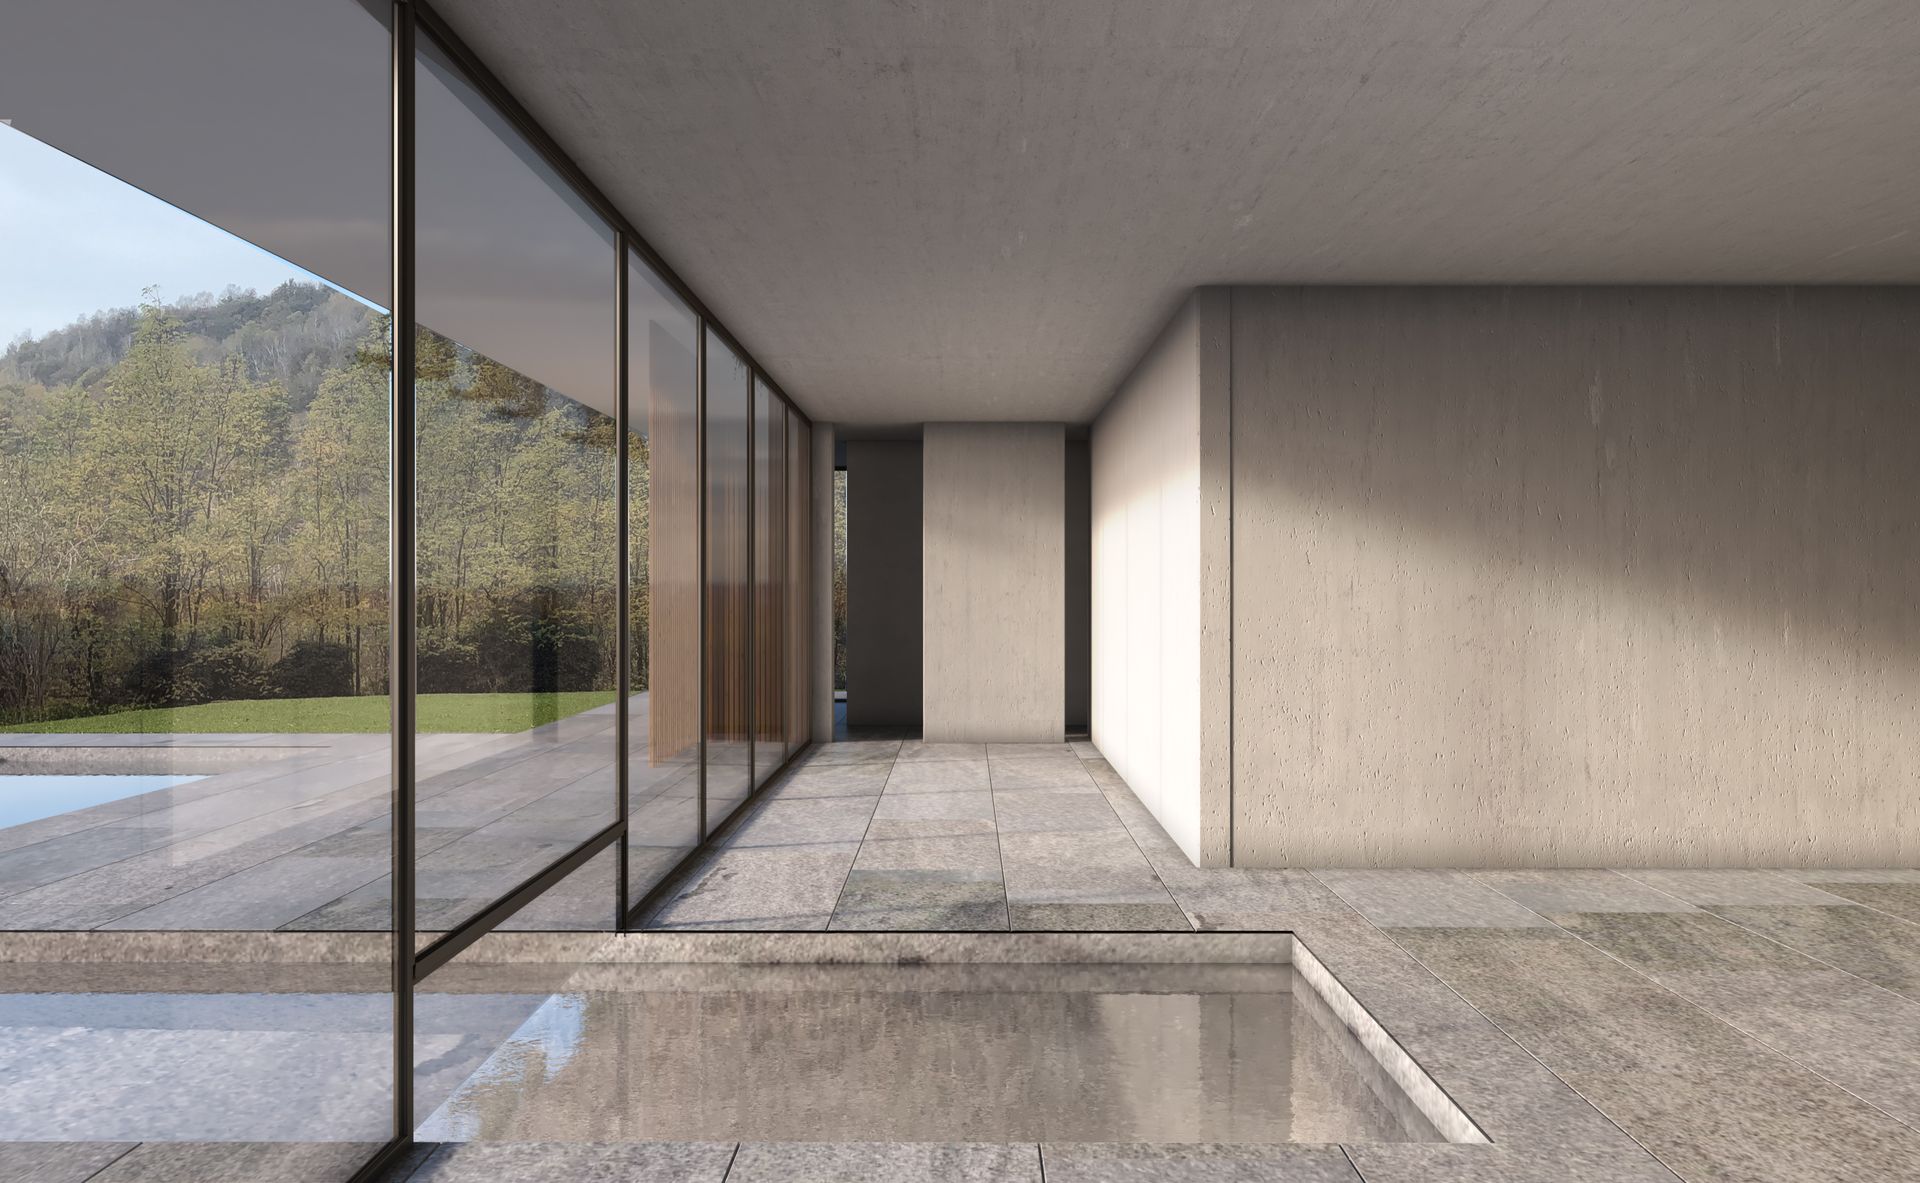 Spa Hotel concept project, finishing details, research of architectural components Bergamo, Brescia, Lake Como, Lake Garda, Milan. Officina Magisafi architecture design - interior pool rendering